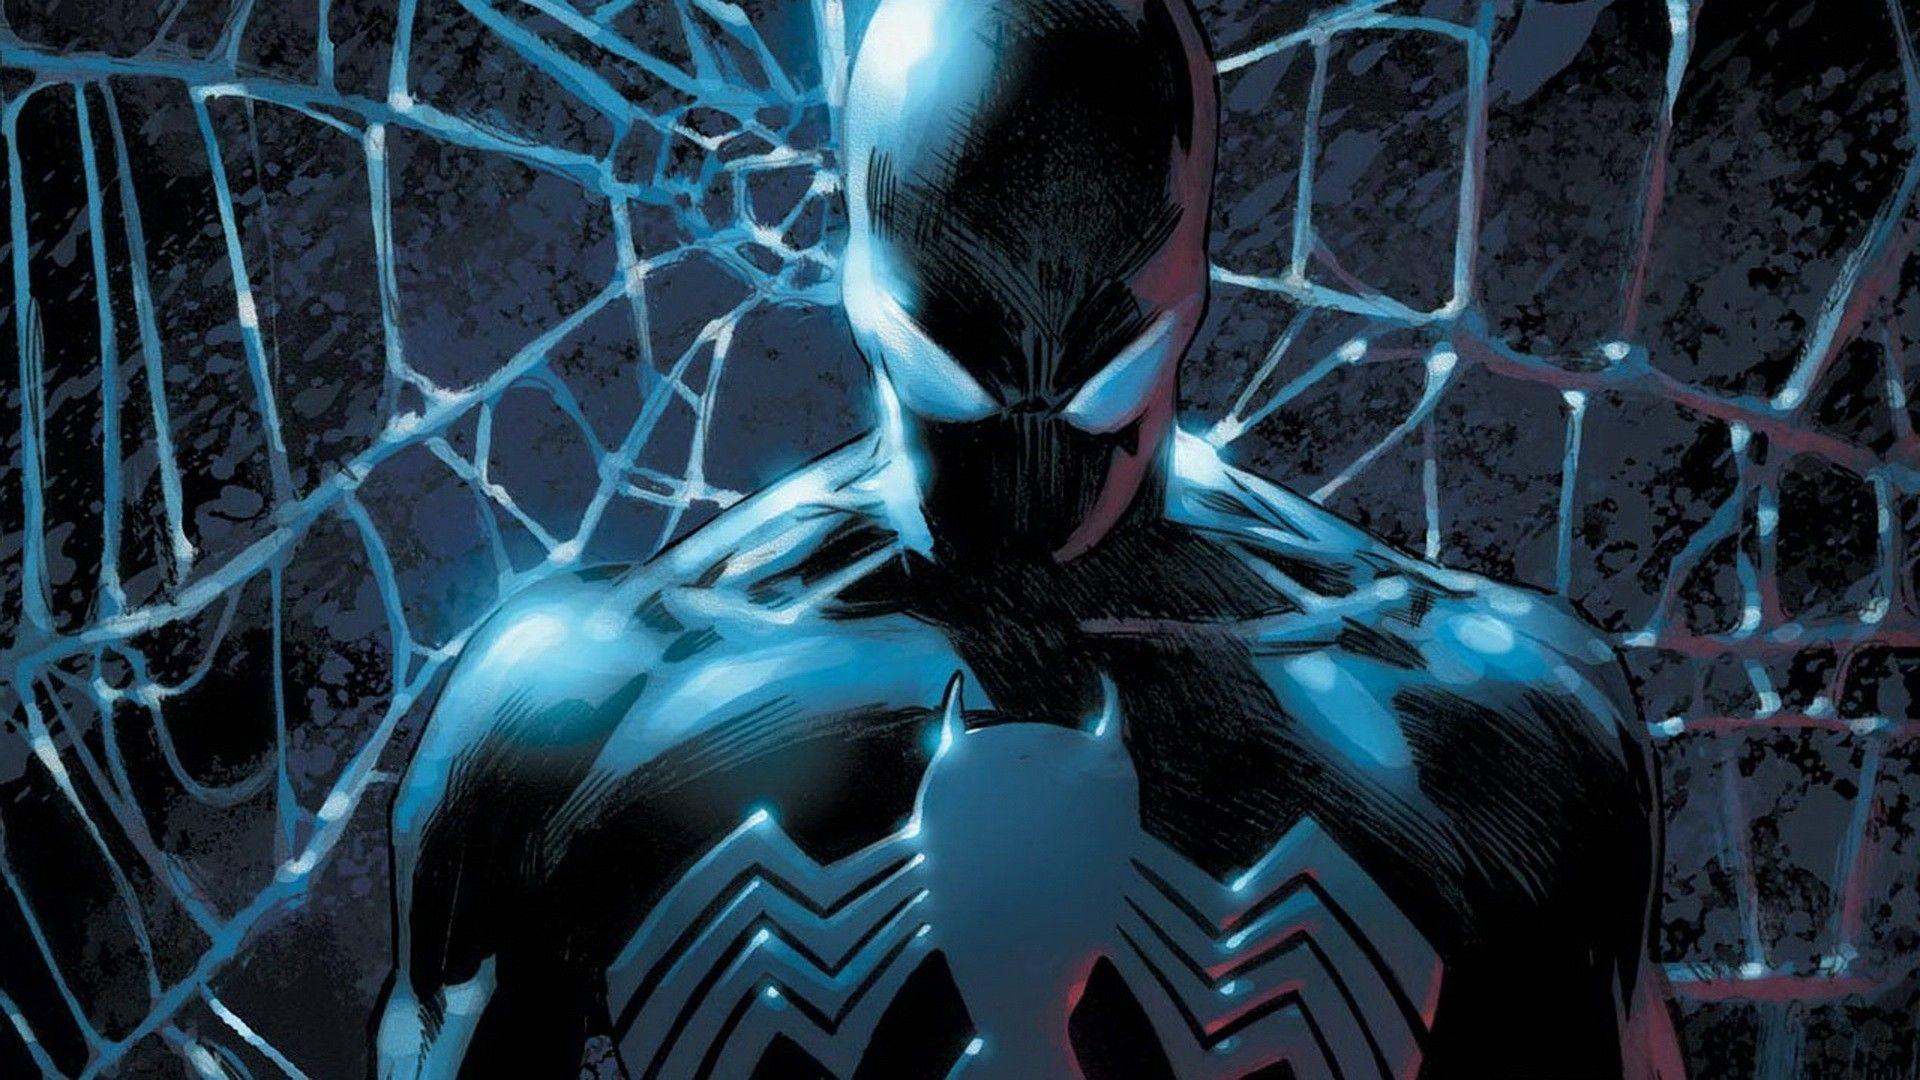 Fresh Spiderman 3 Black Suit Wallpaper. The Black Posters